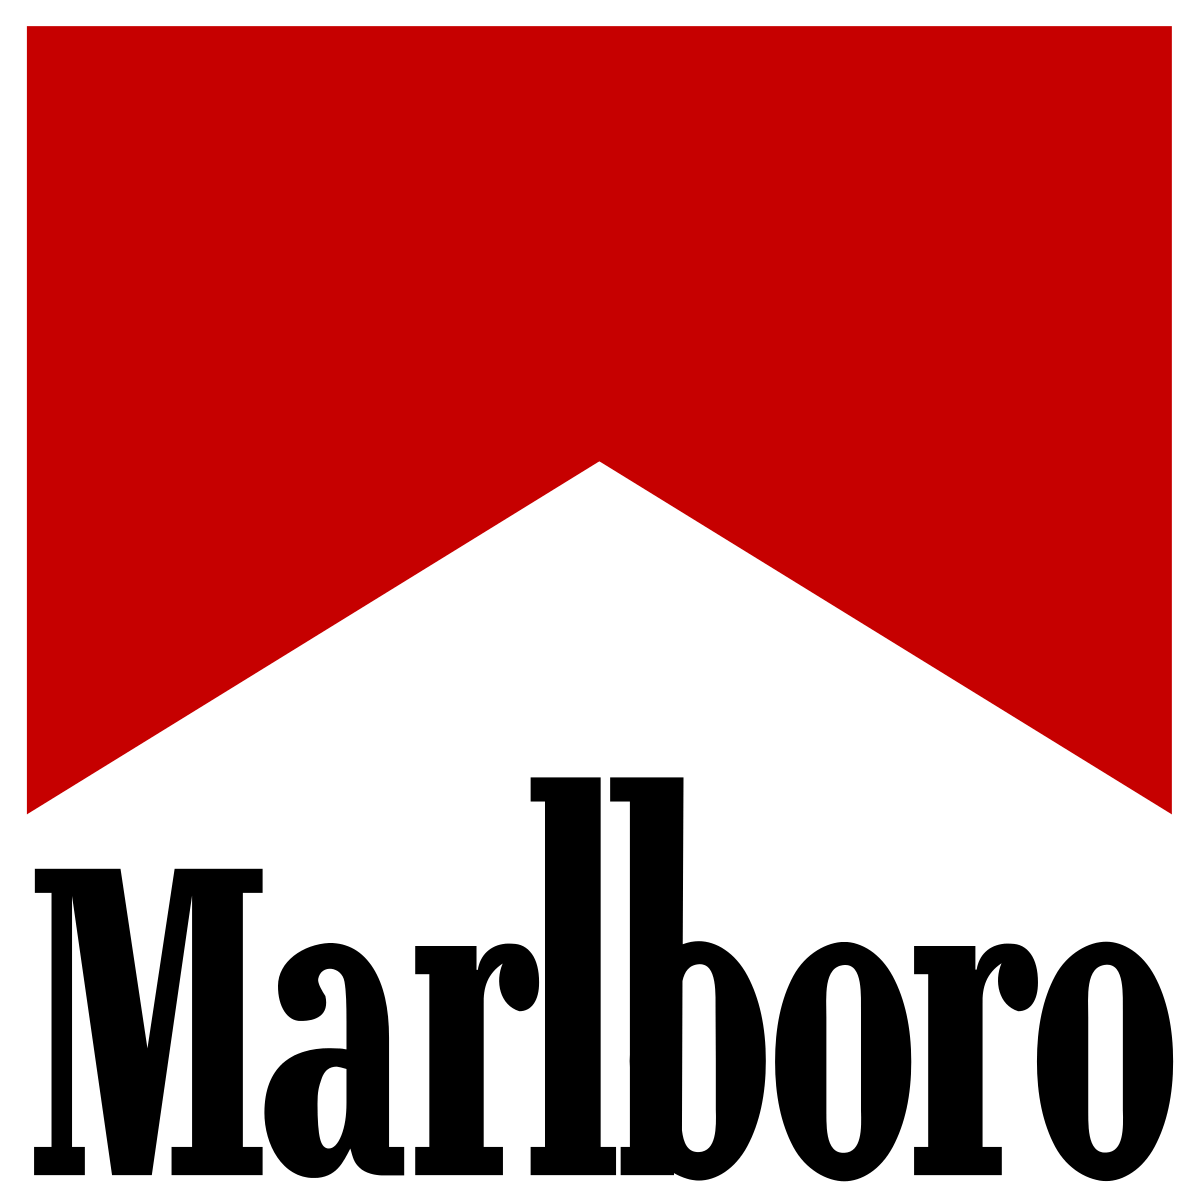 Maarlboro Logo - Marlboro (cigarette)